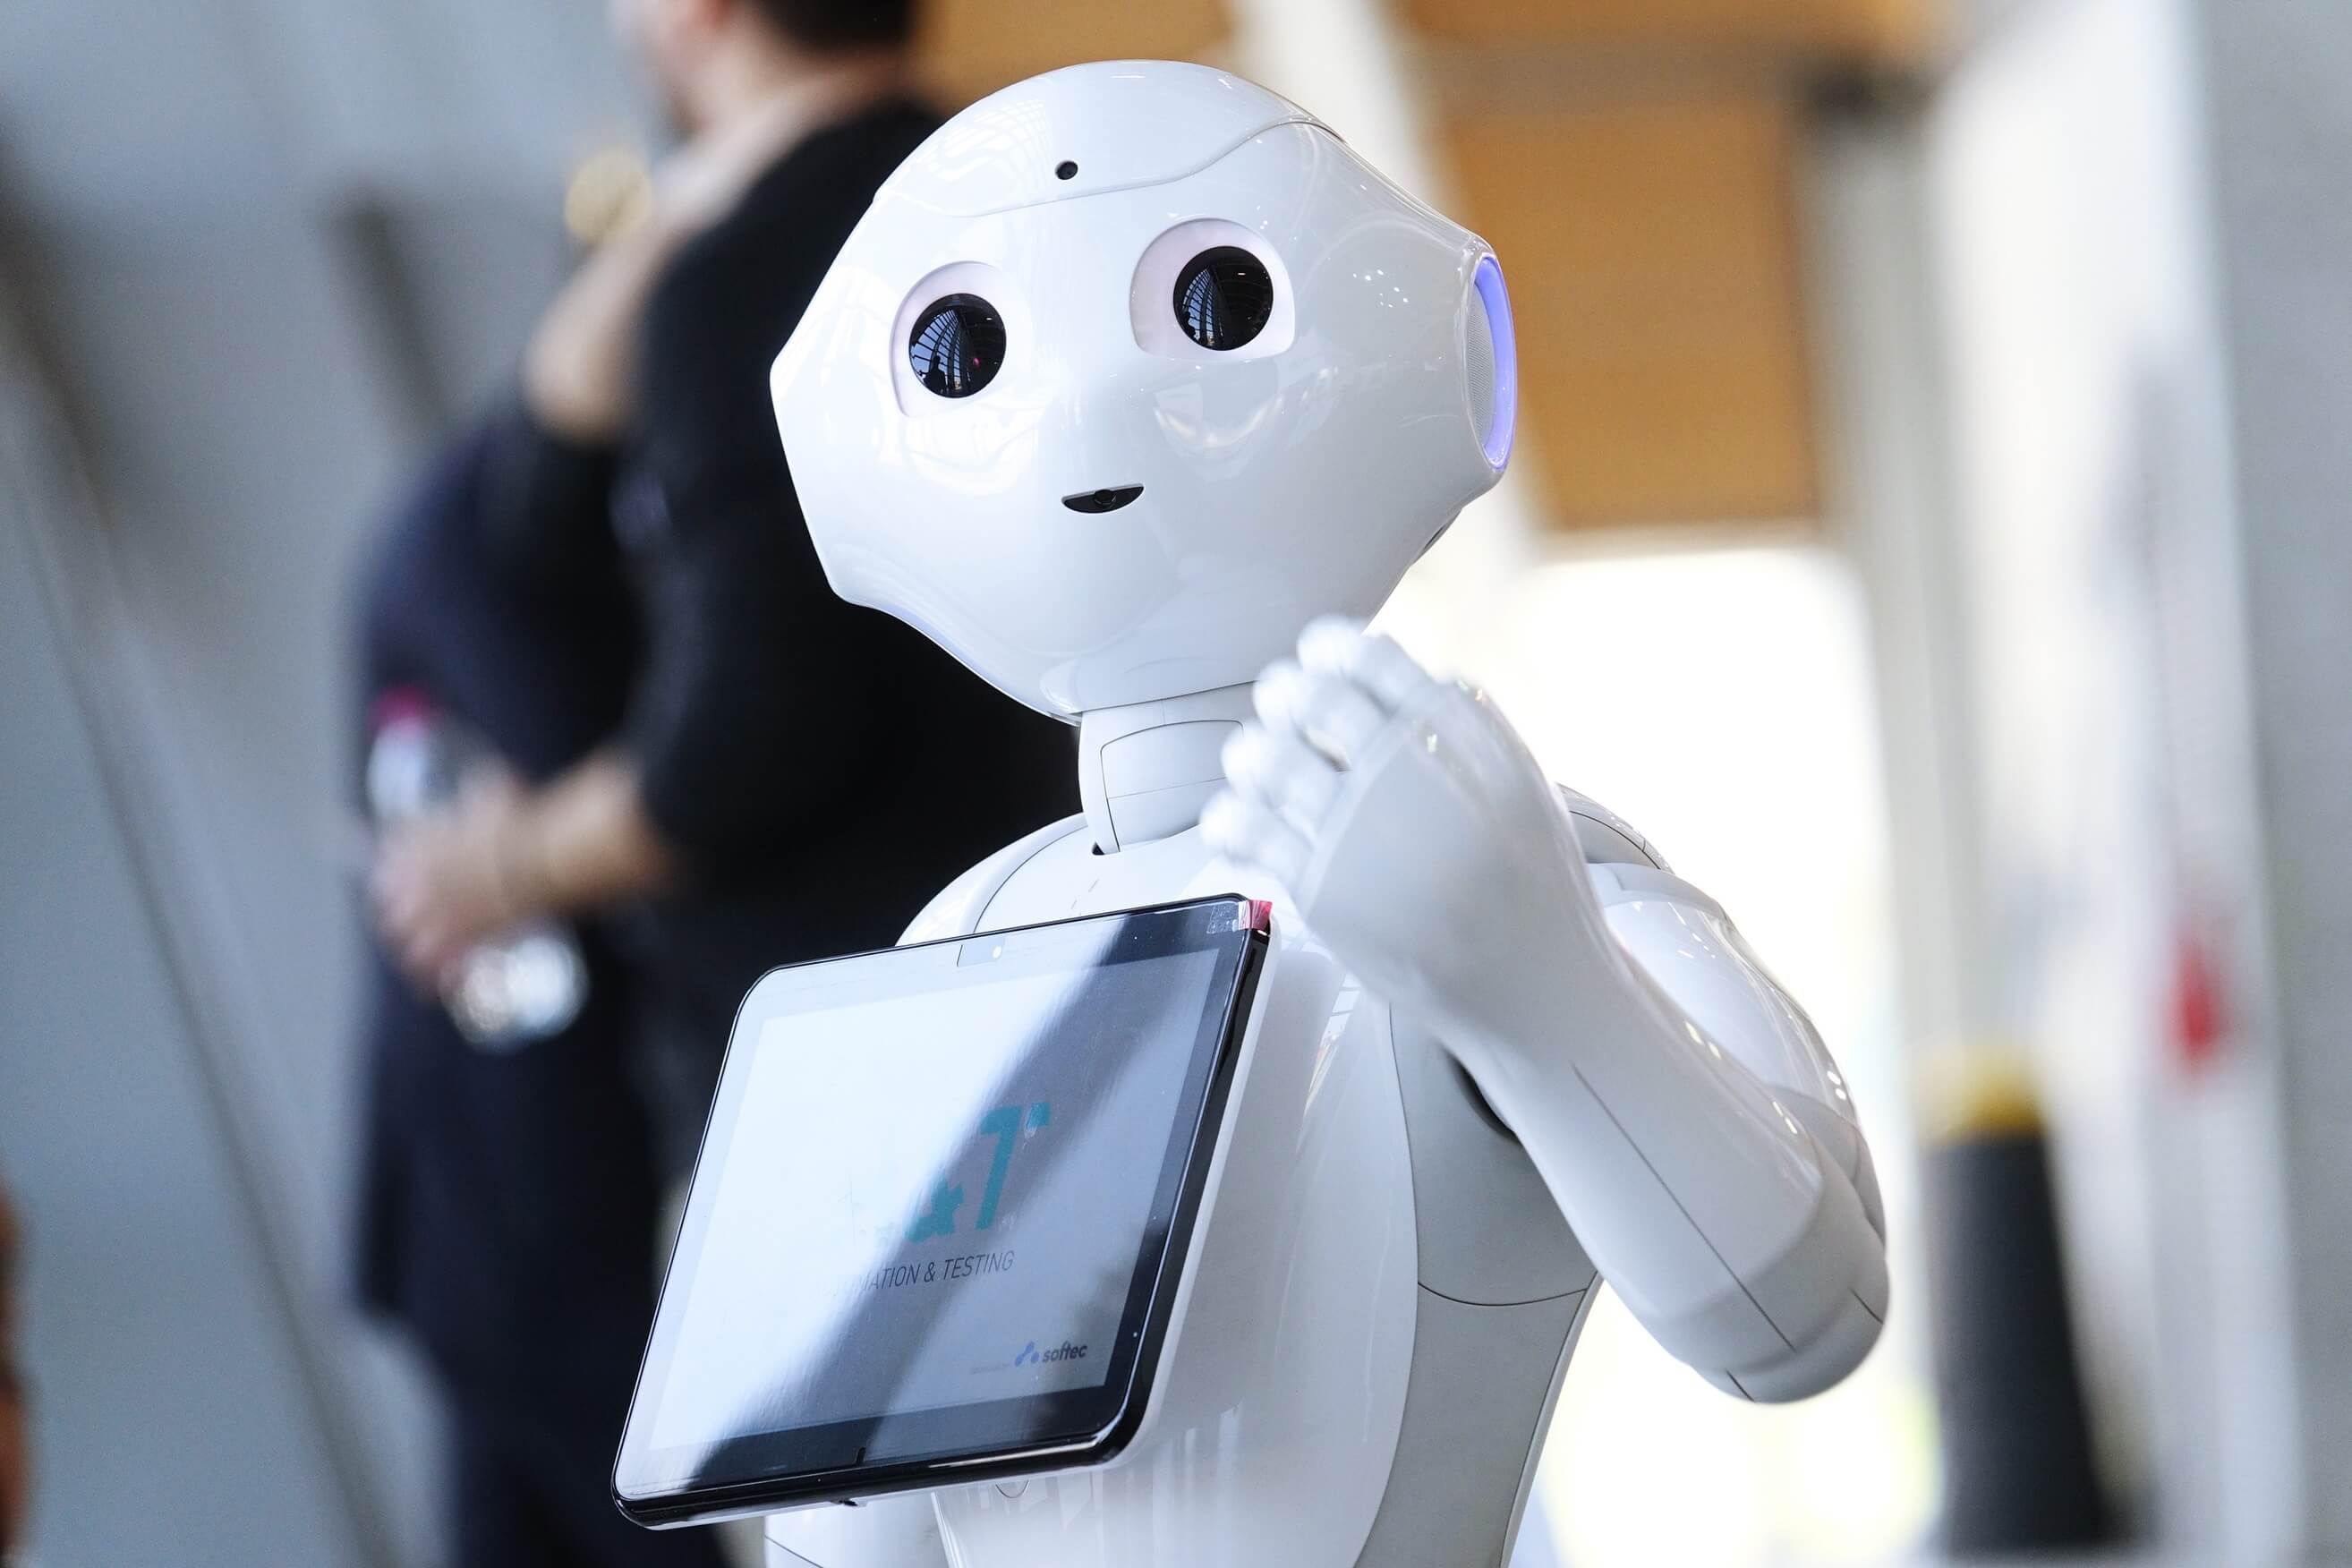 Opinion: Robots ready to move mainstream